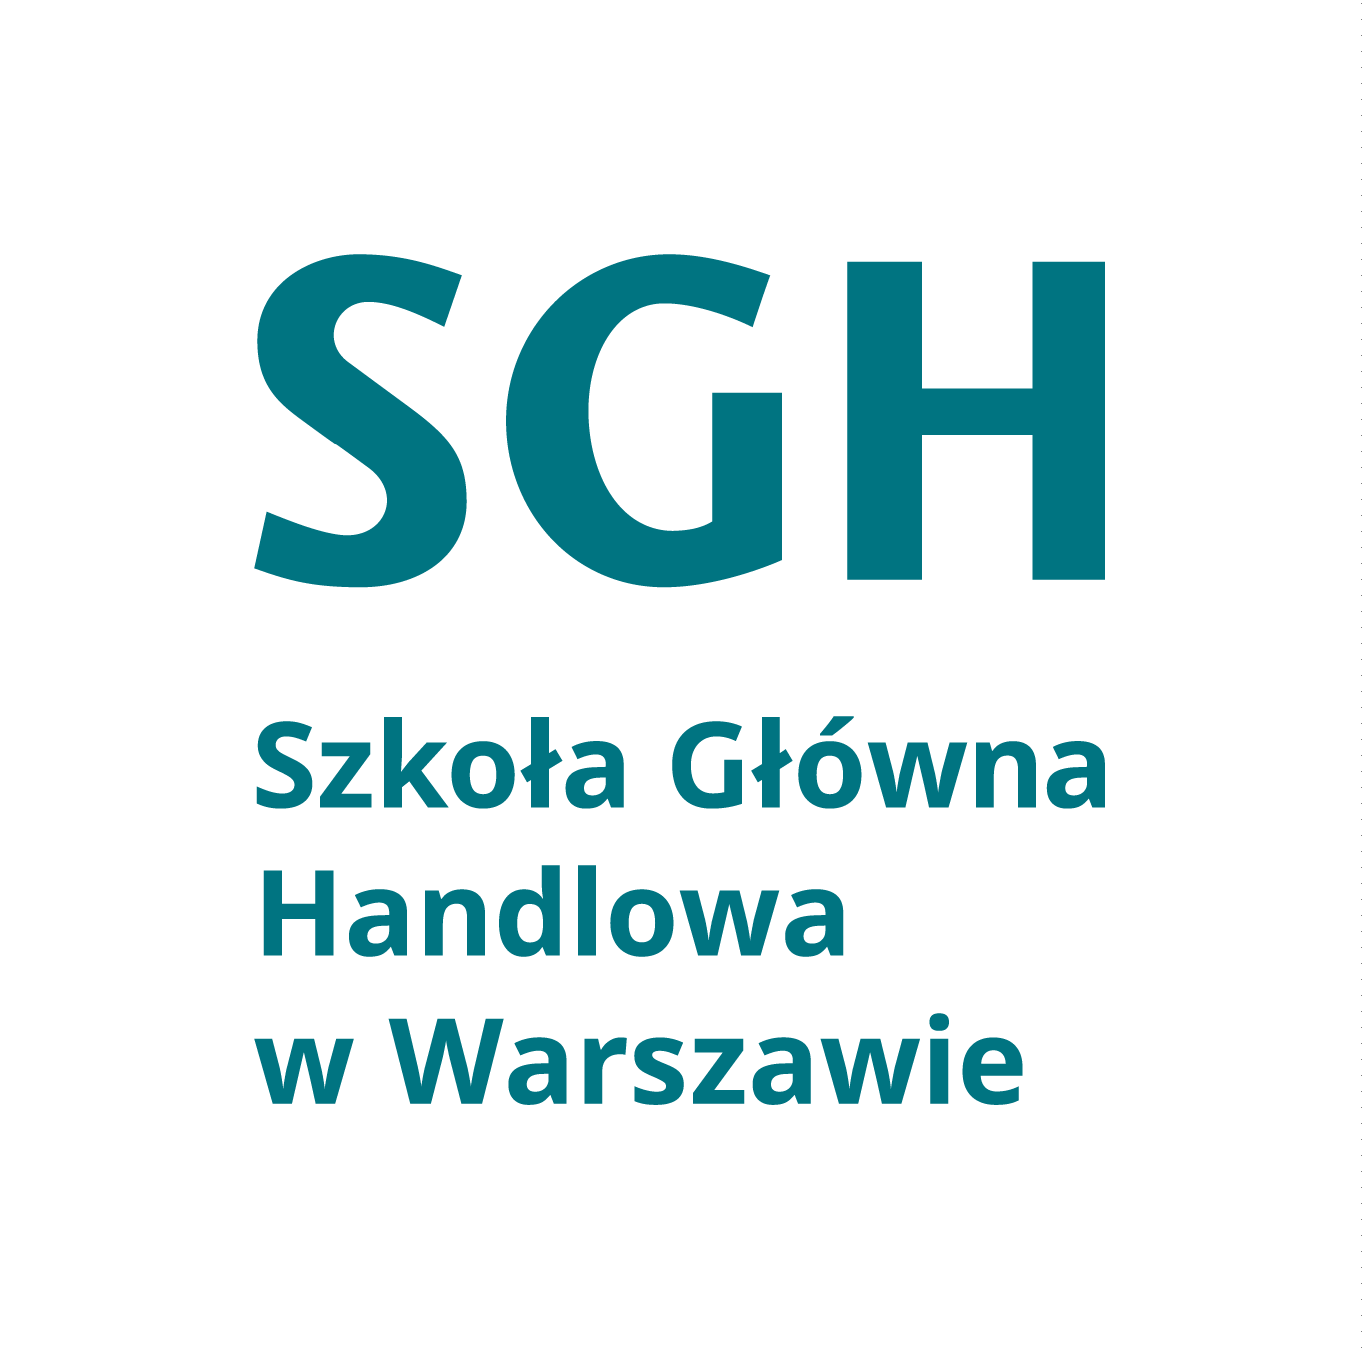 SGH Logo - Visual identity of the SGH